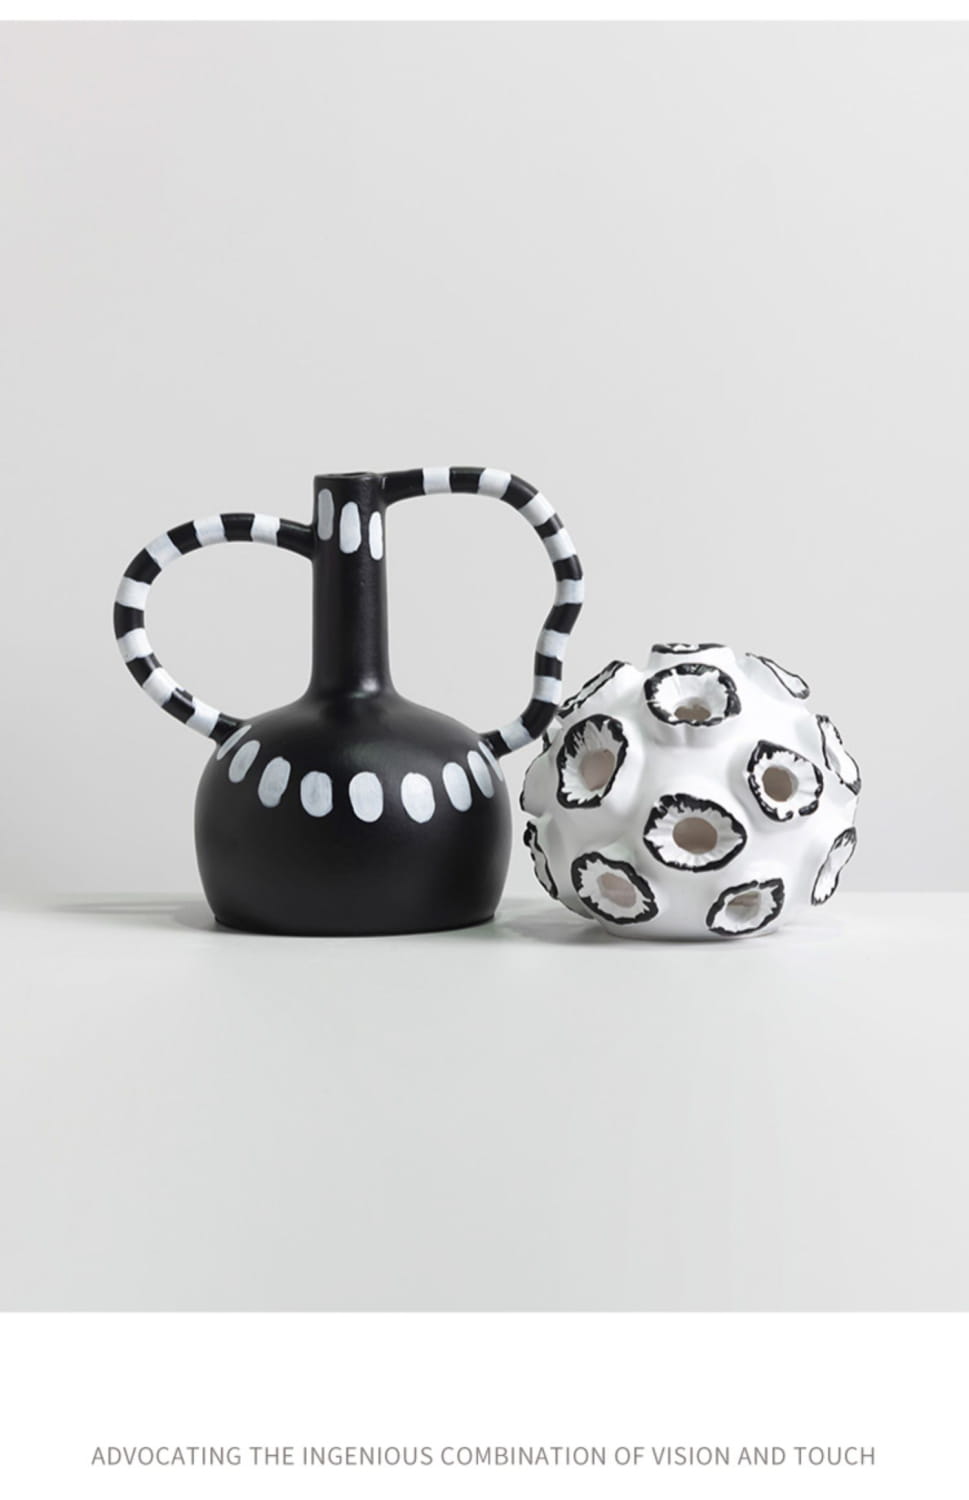 Alinda Bauhaus Style Black and White Combination Ornaments